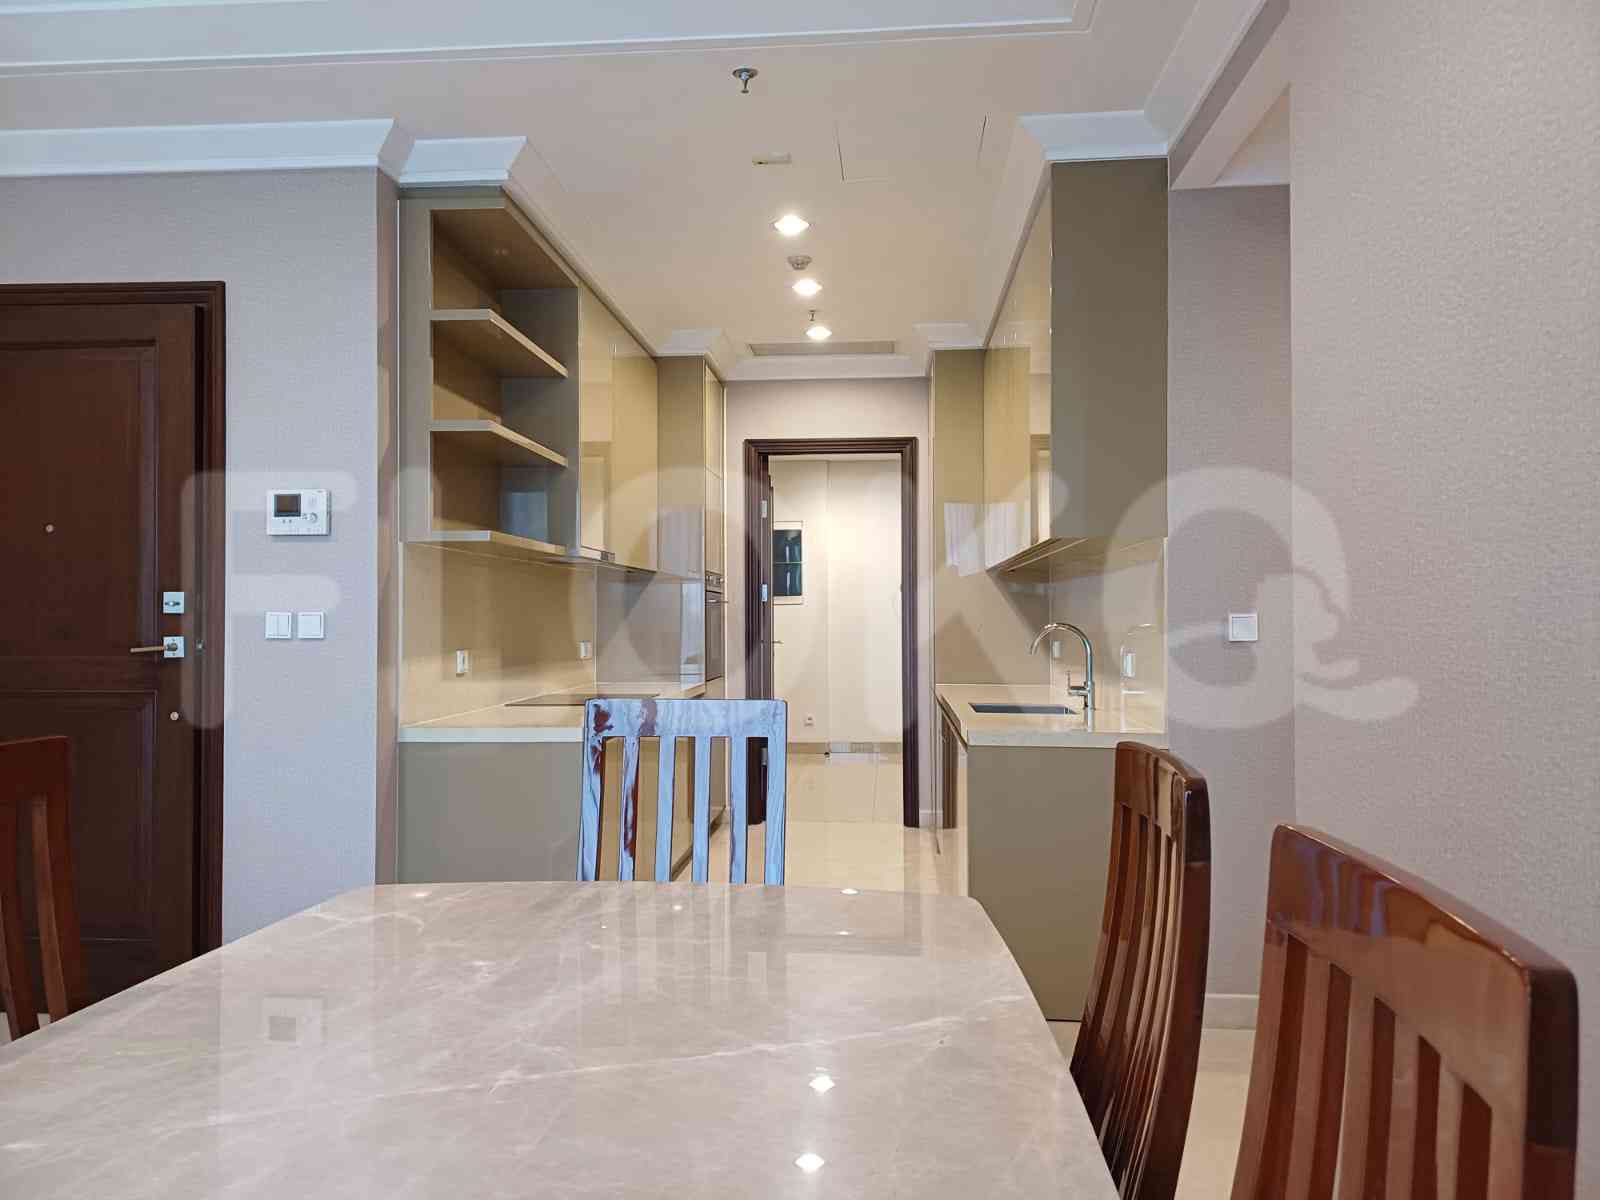 3 Bedroom on 3rd Floor for Rent in Pondok Indah Residence - fpo5ef 3